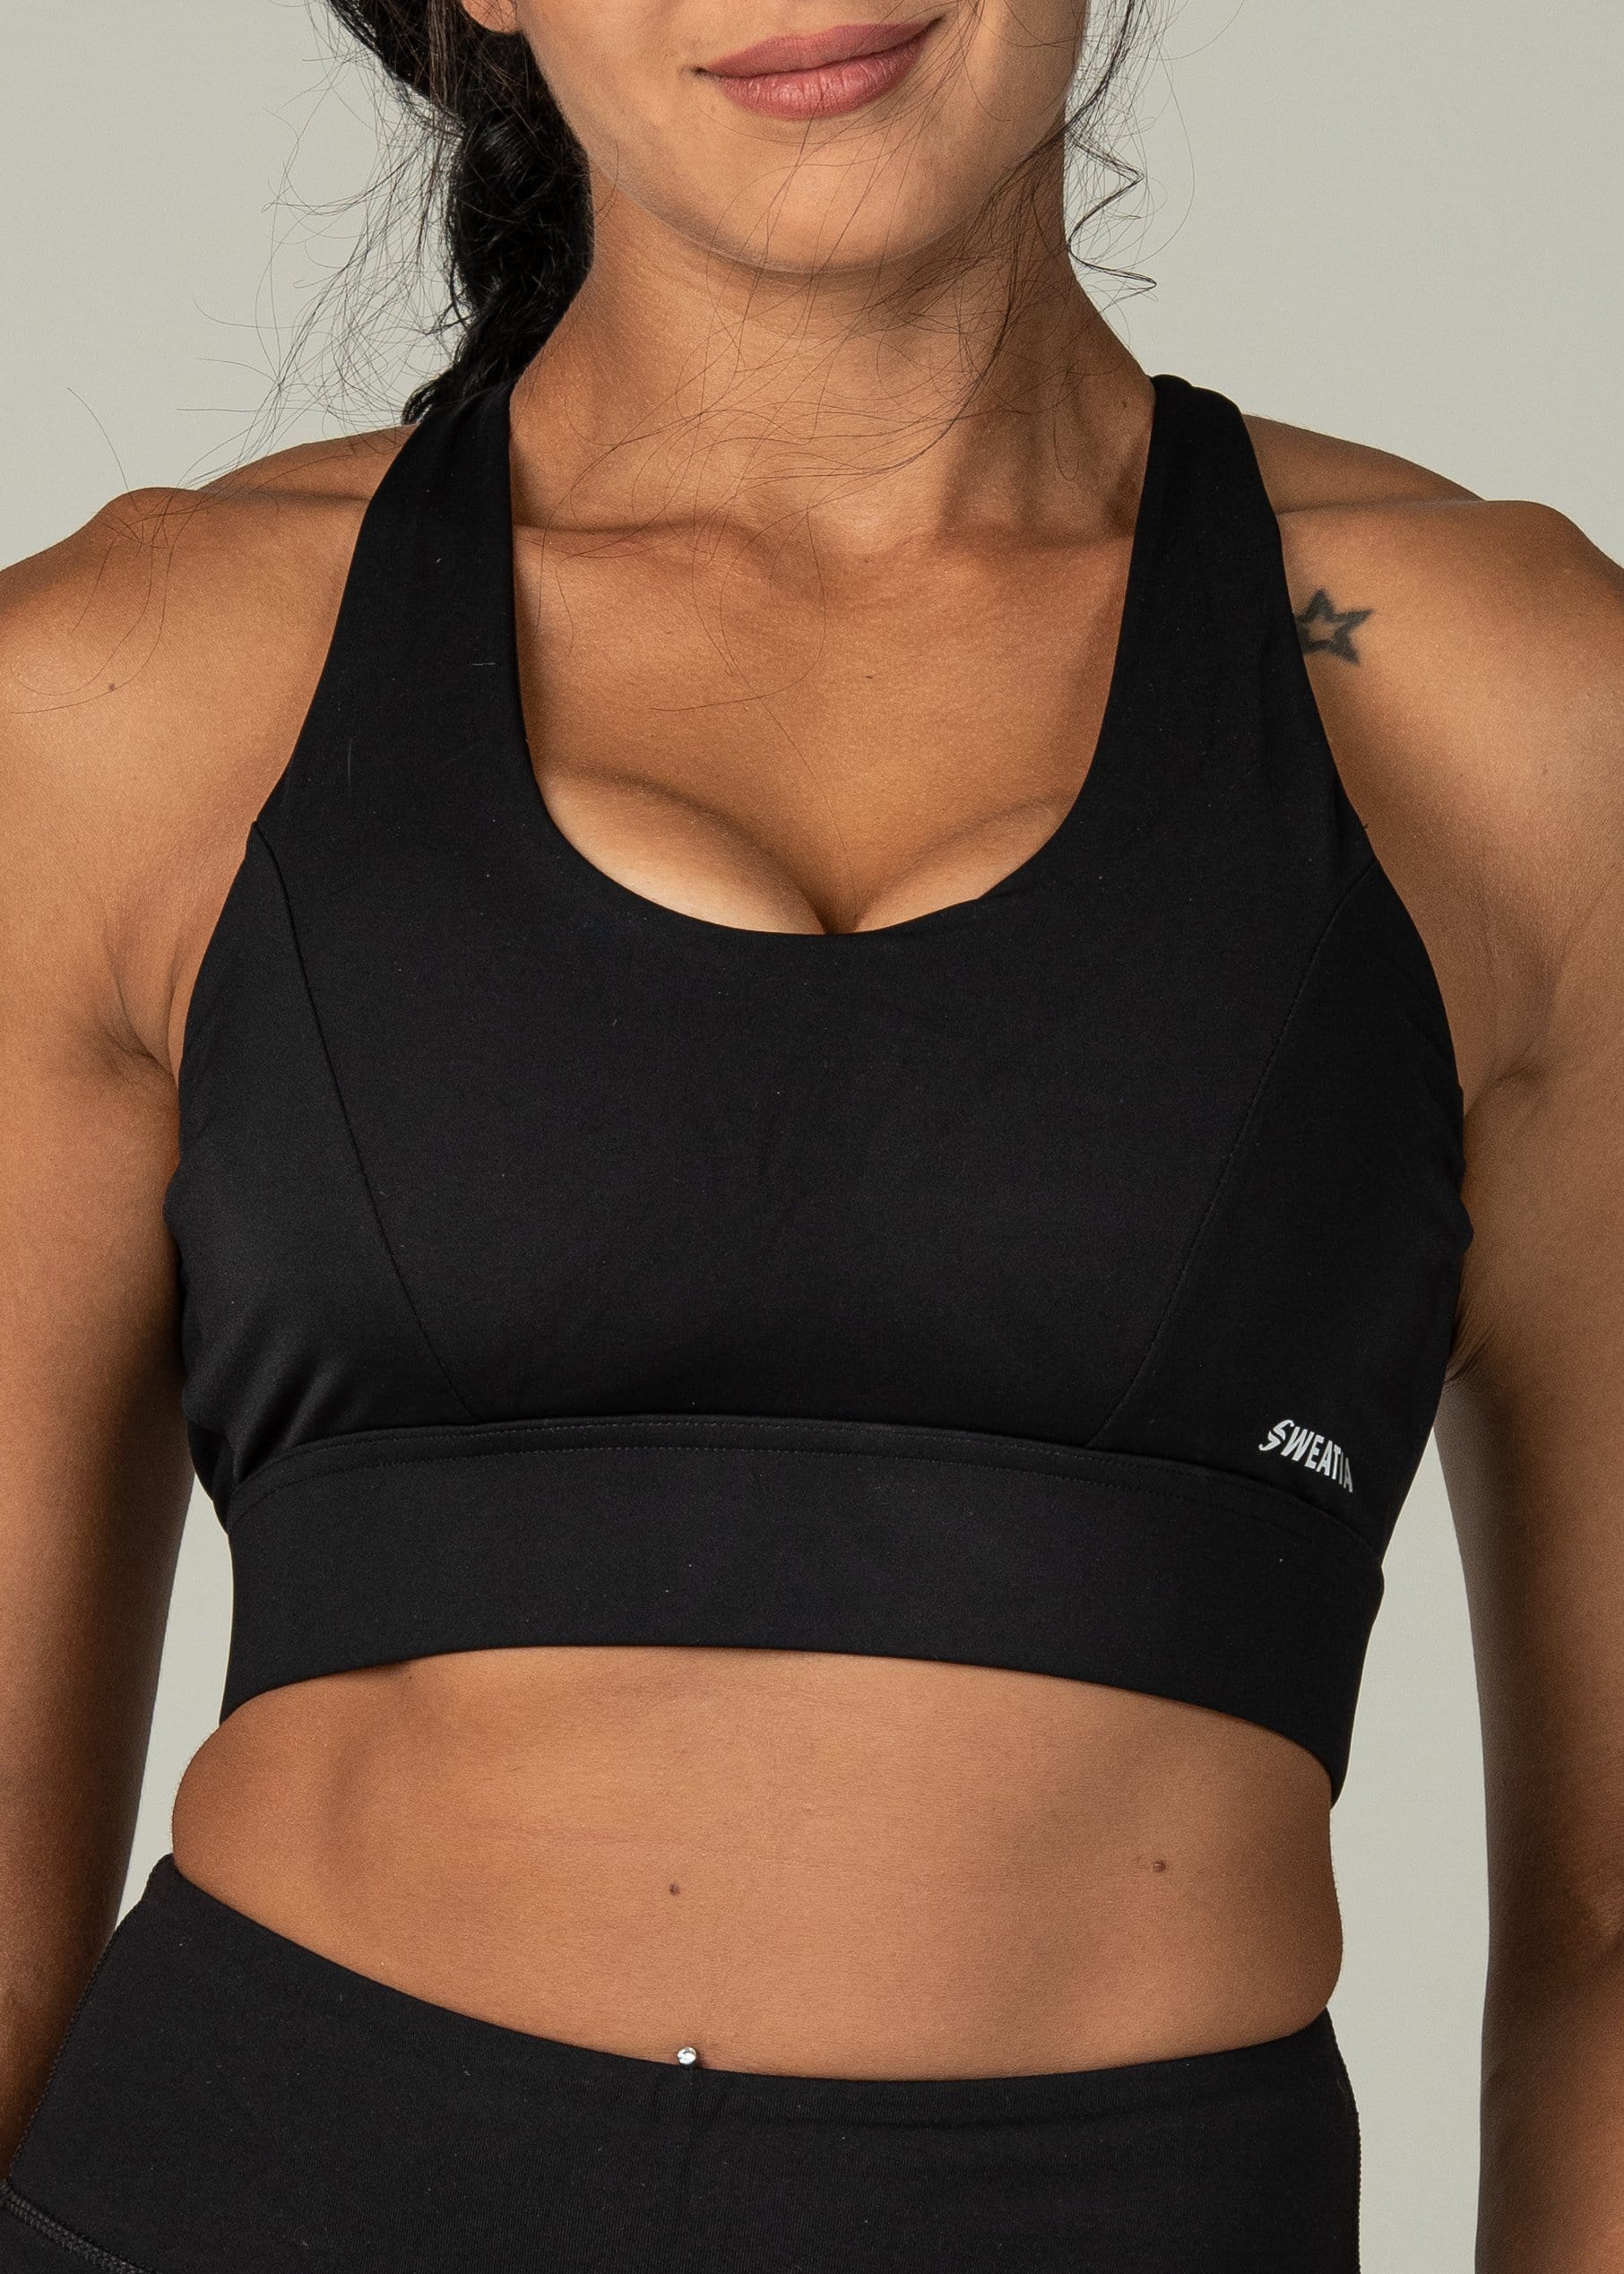 Full coverage sports bra - Activewear manufacturer Sportswear